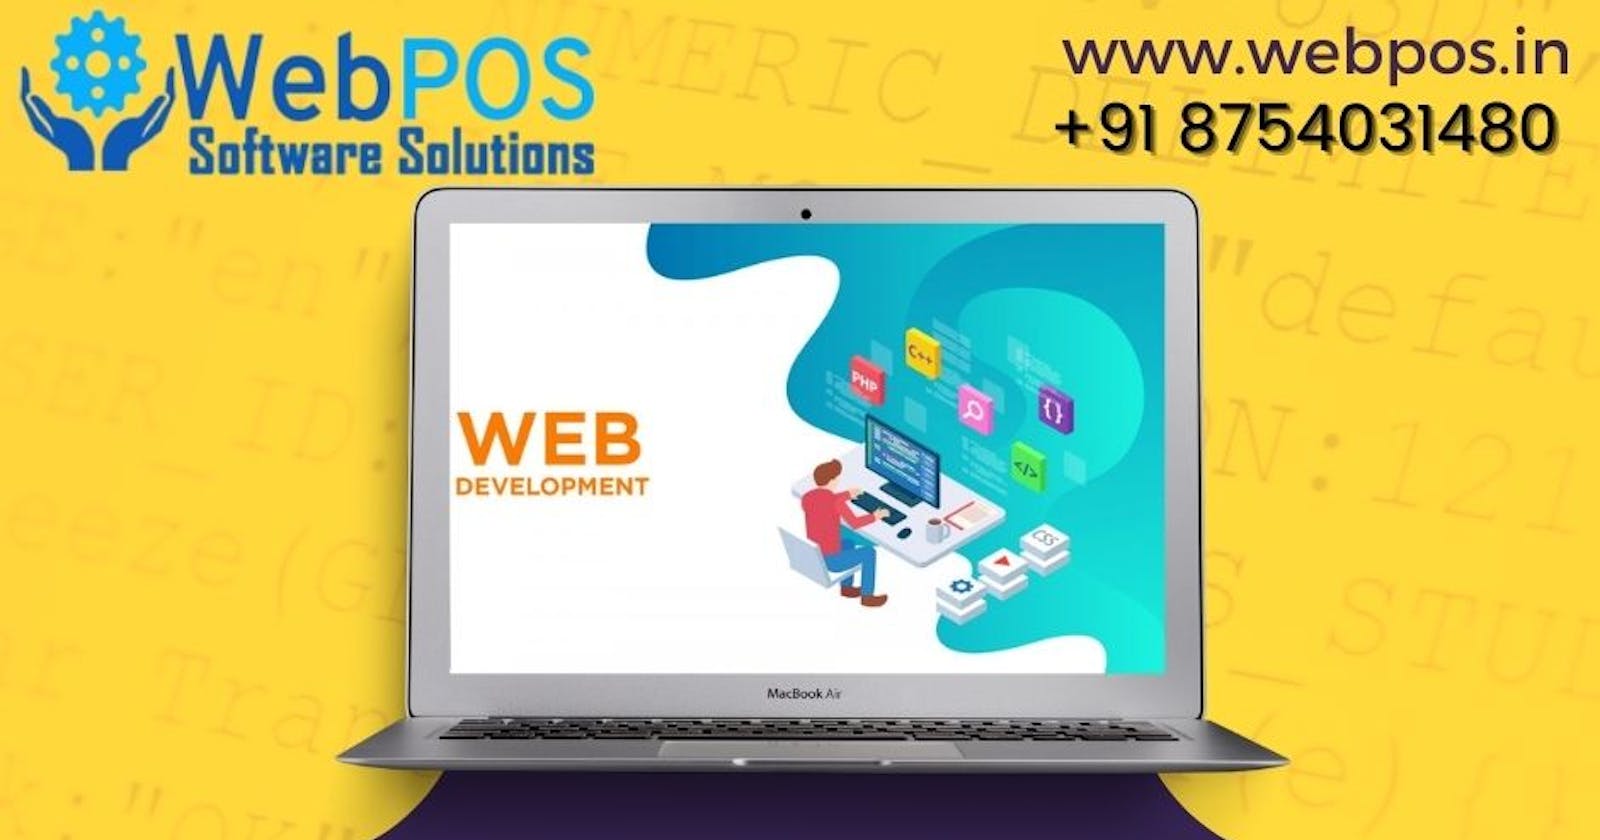 Webpos Website development & SEO Services in Chennai